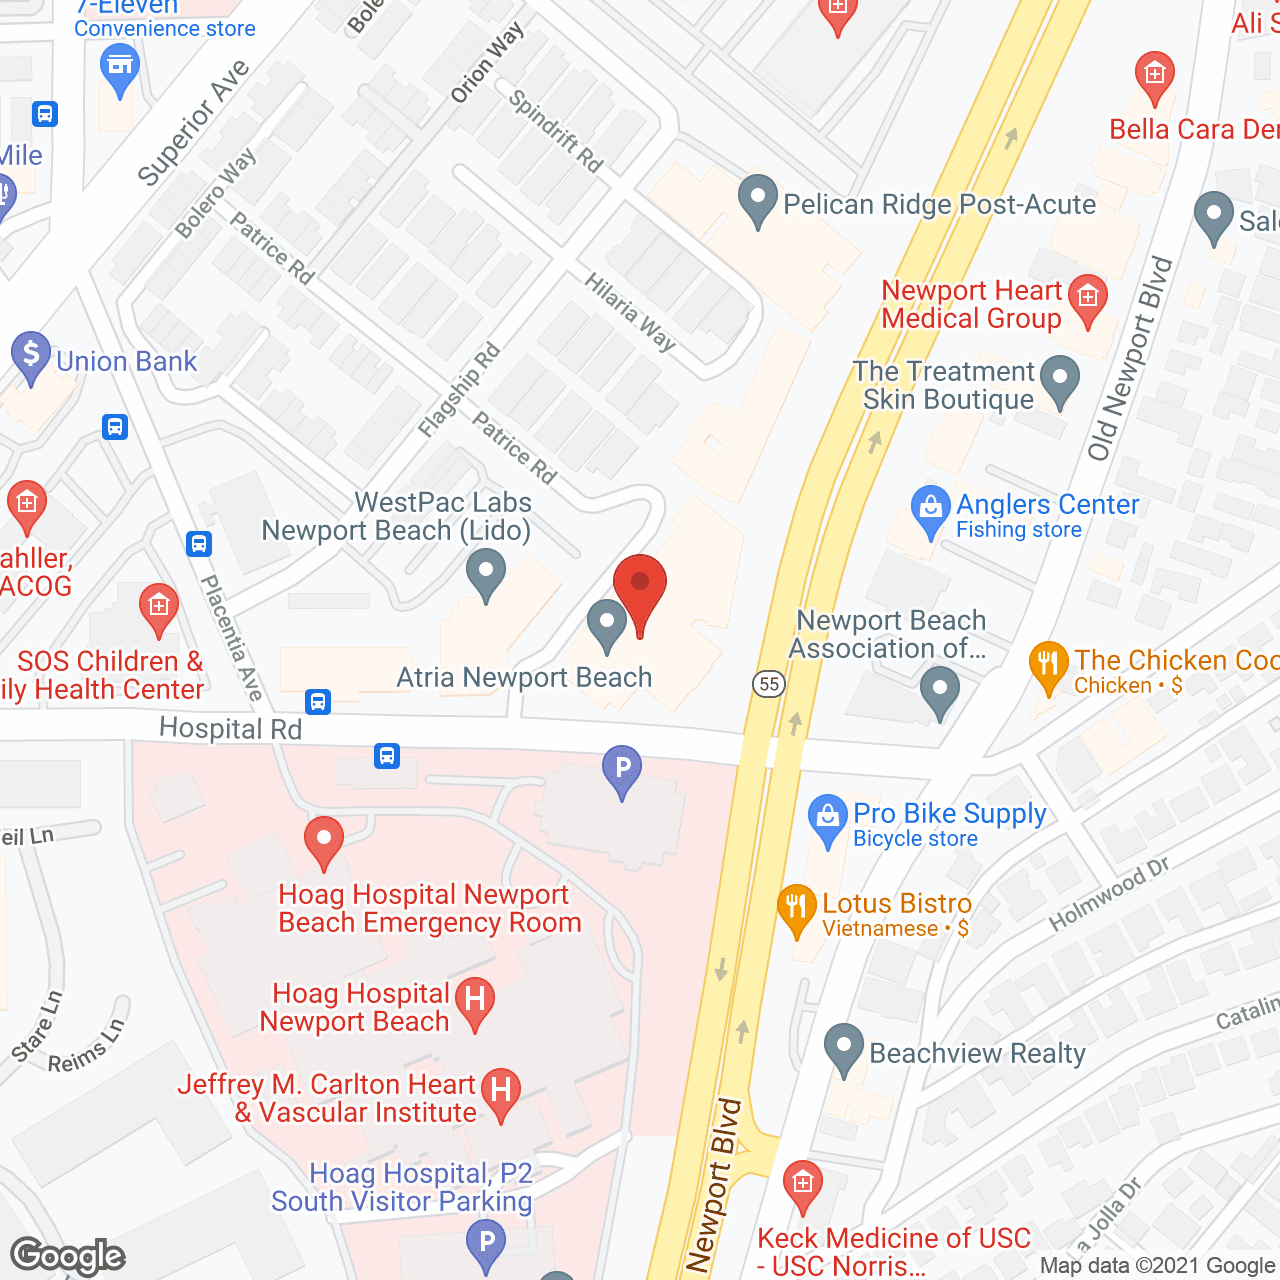 Newport Villa West in google map